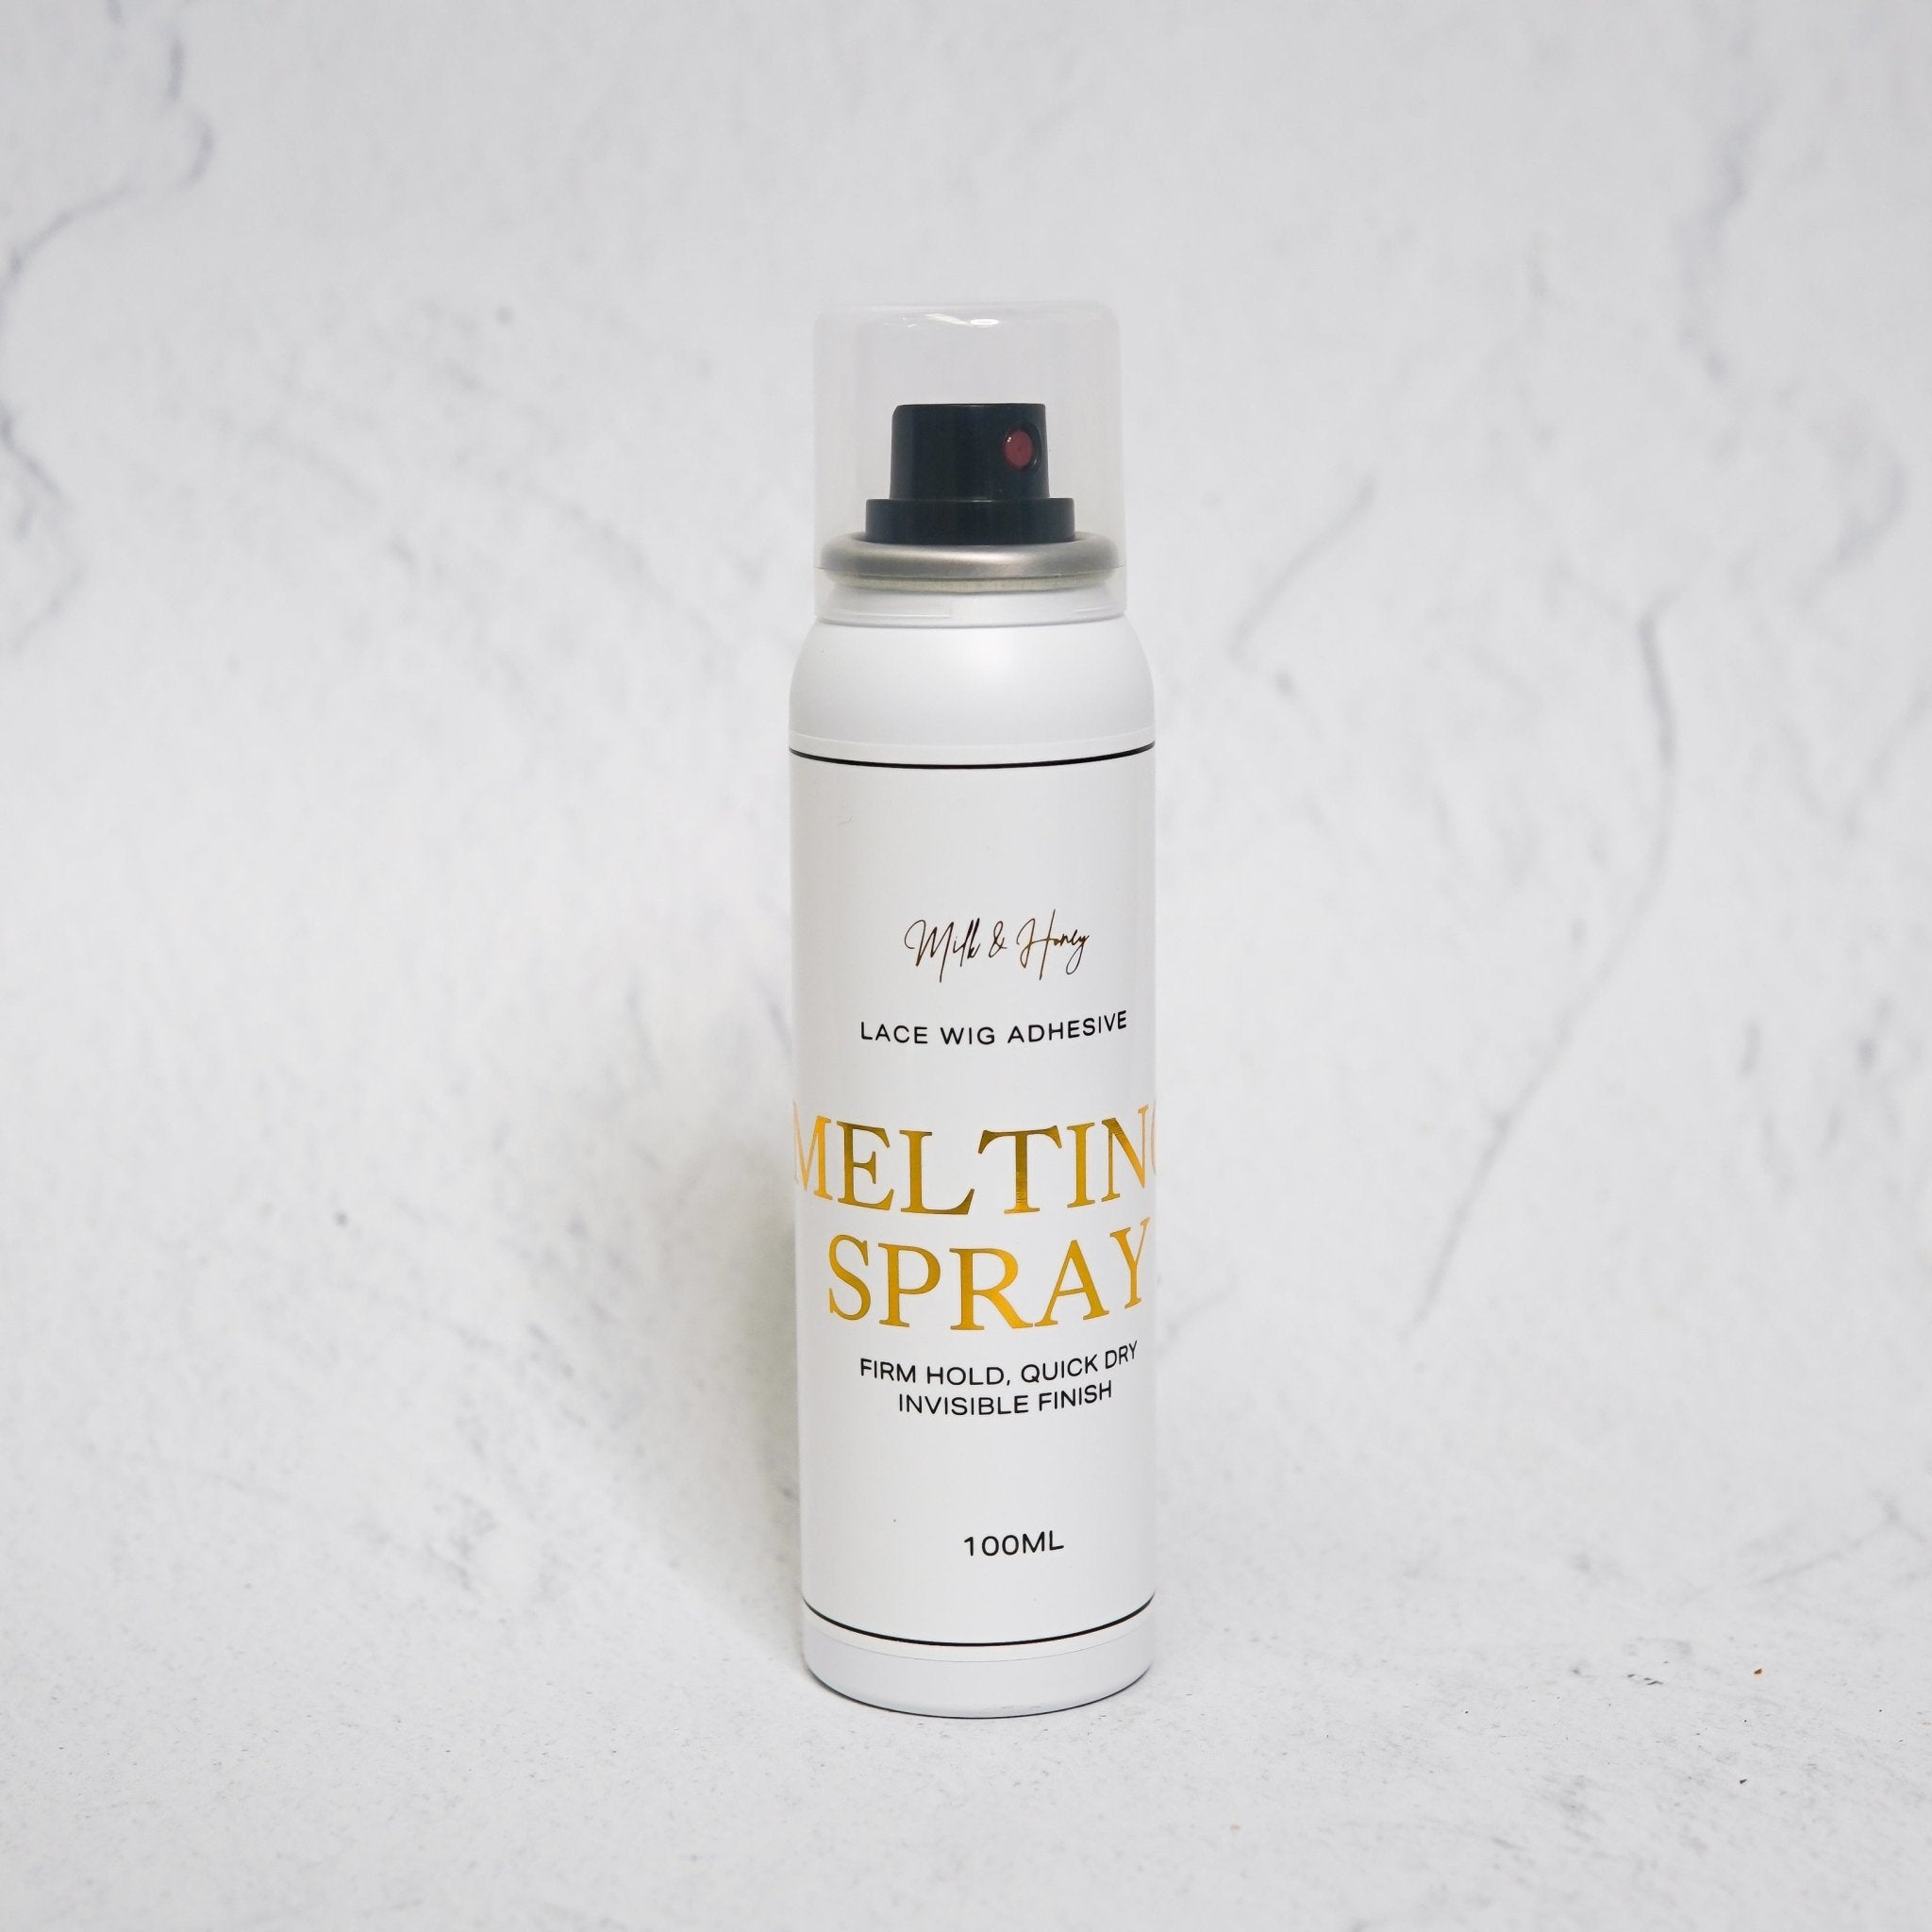 Trying Ebin adhesive spray and Ebin Melting Spray together😍 #ebinlace